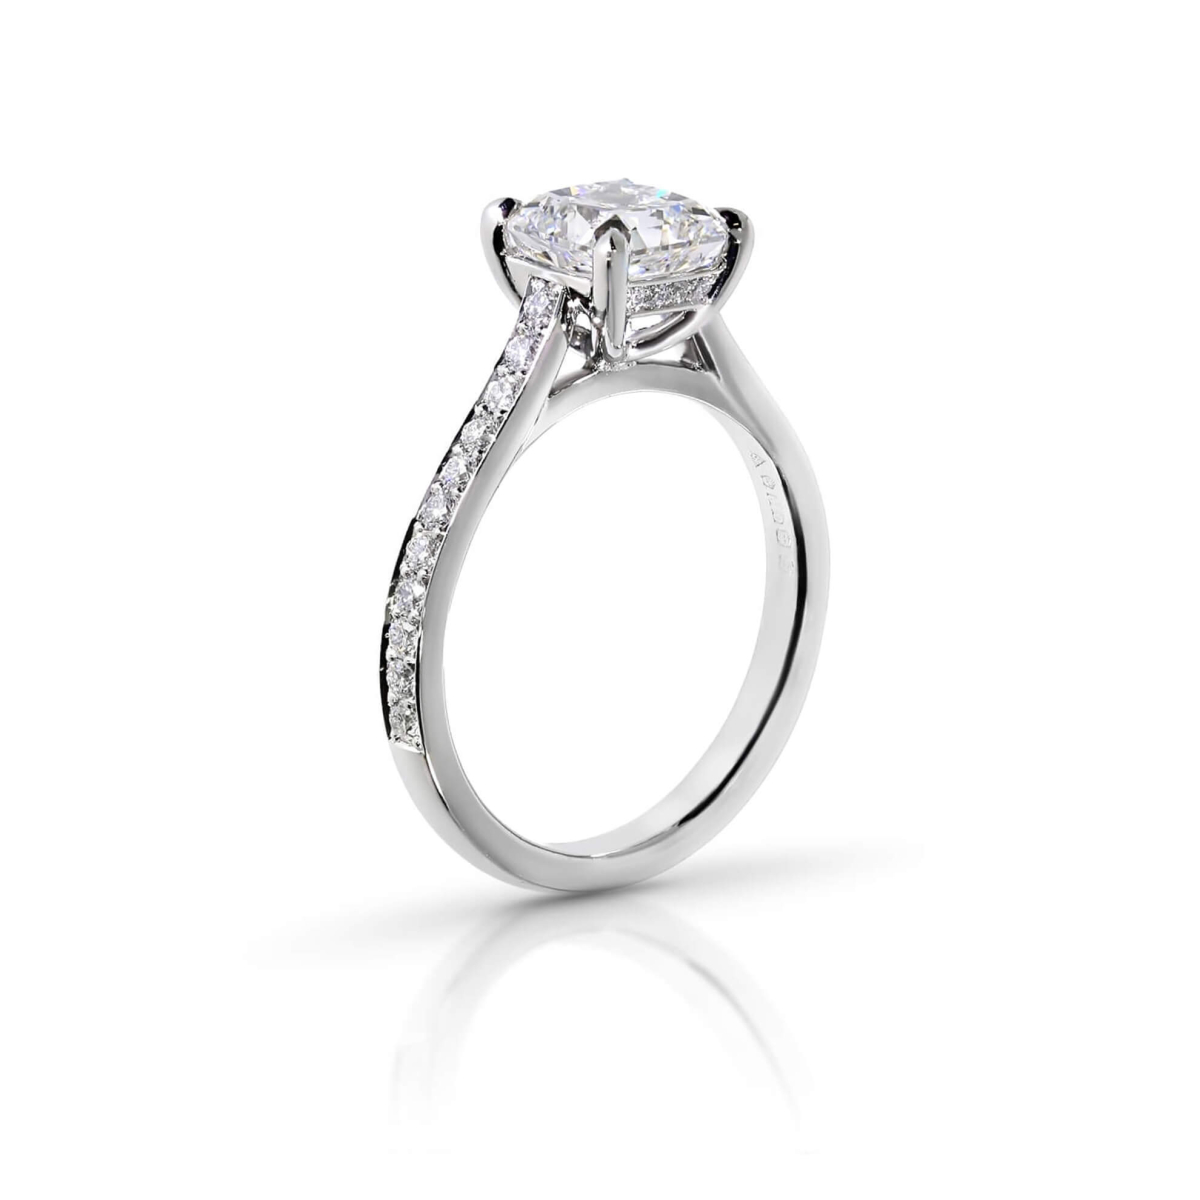 Radiant Cut Diamond Engagement Ring with Pavé Set Diamond Band